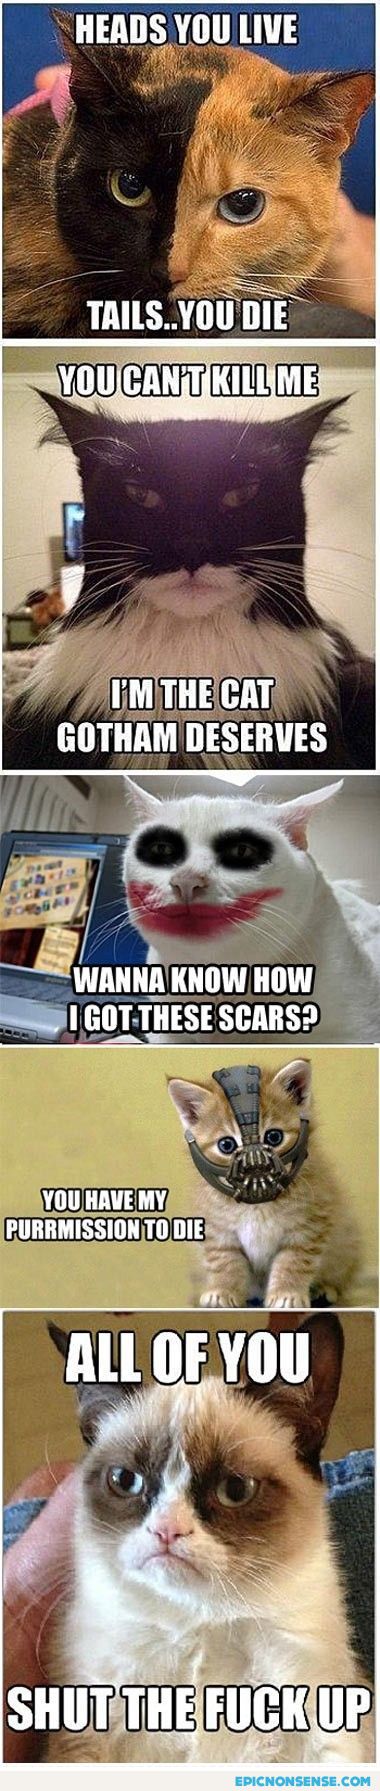 Gotham-Cats vs Tard